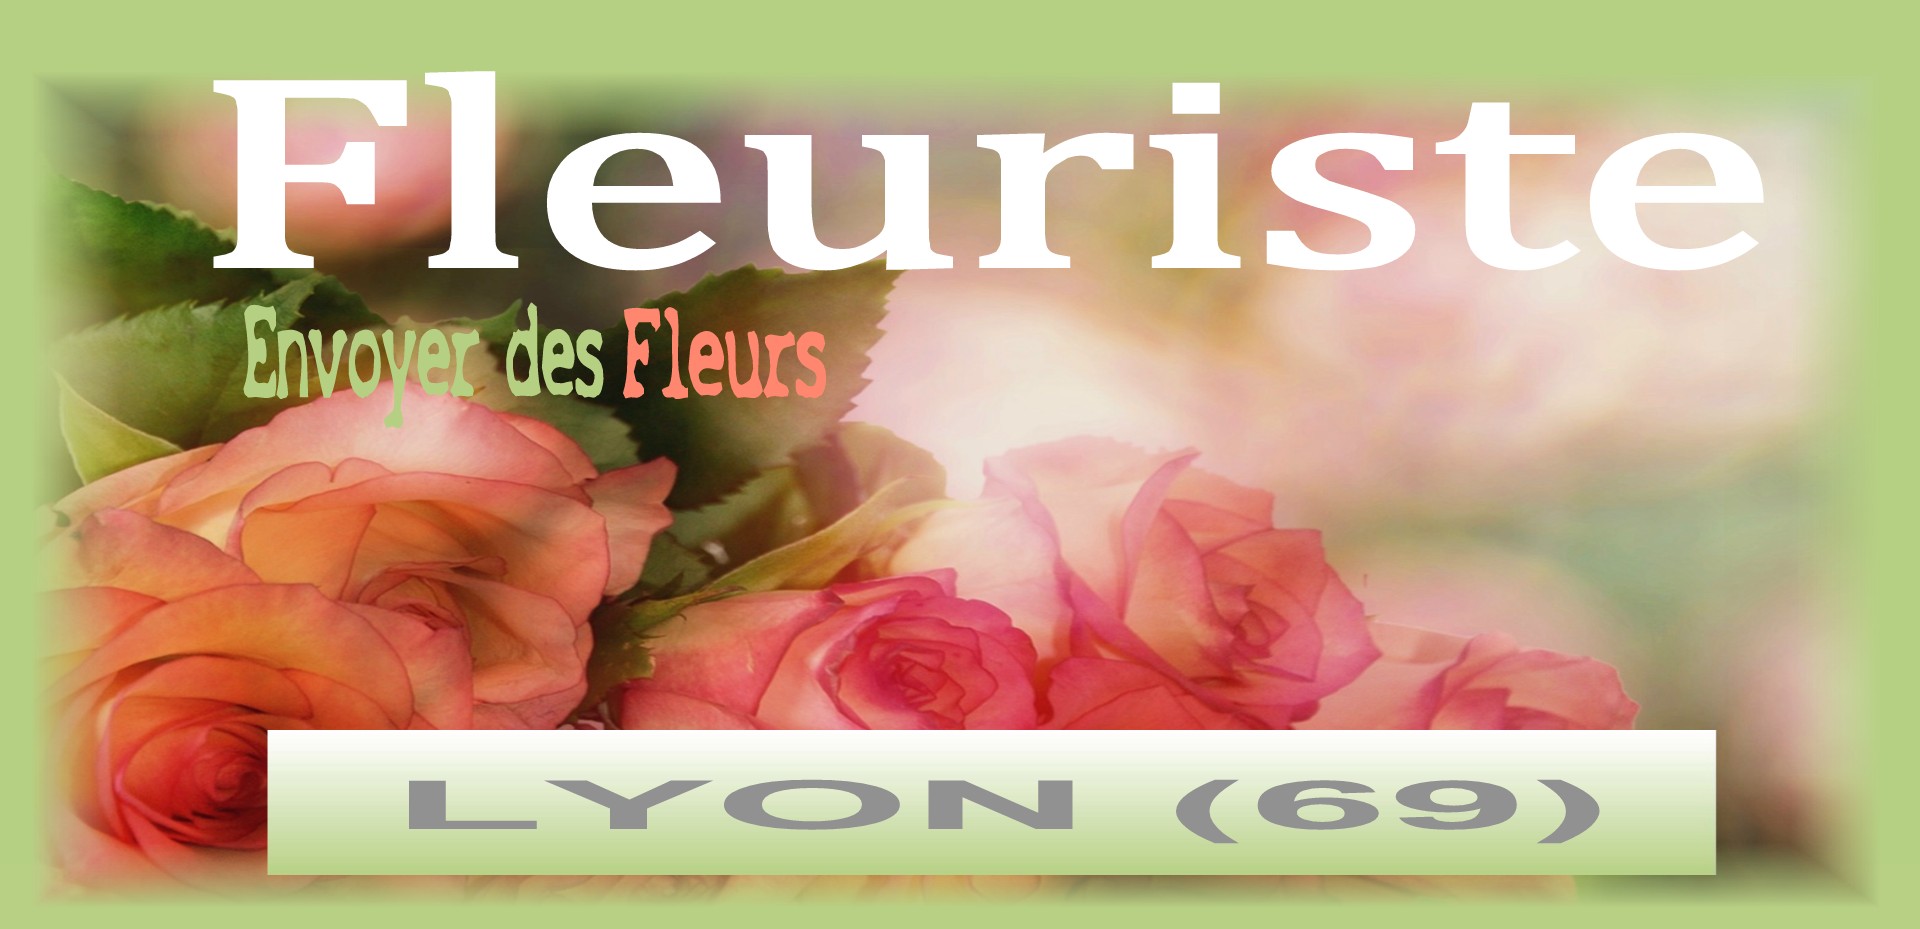 FLEURISTE LYON (69) - LIVRAISON FLEURS FLEURISTE LYON (69)